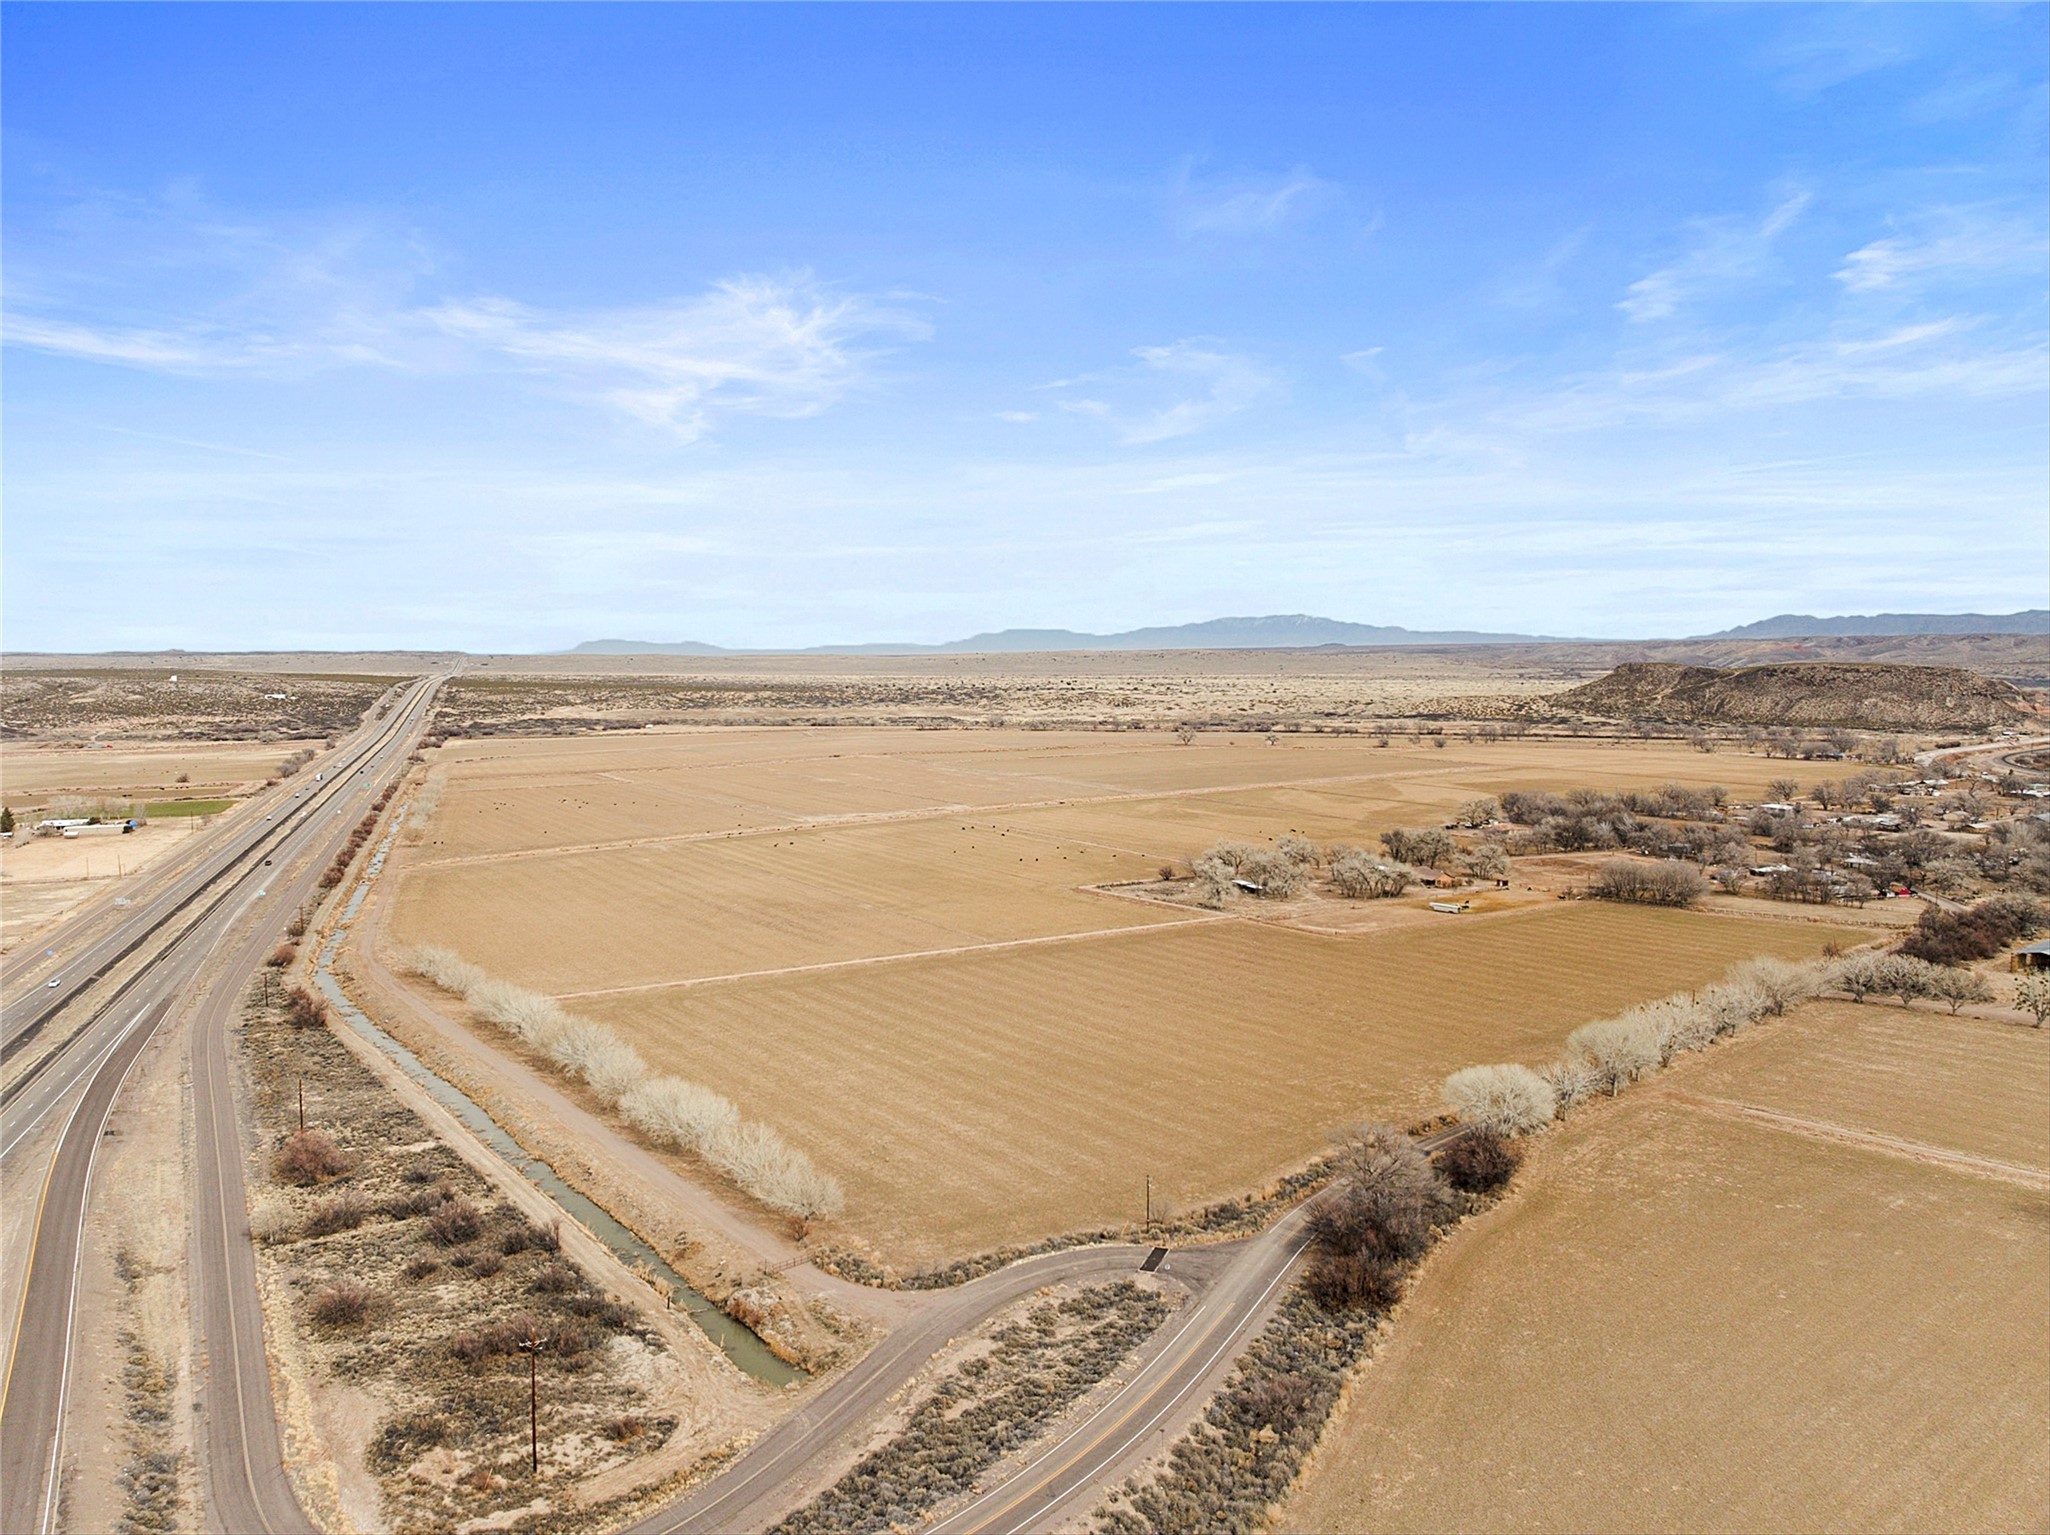 17 San Acacia Road, Socorro, New Mexico 87831, 4 Bedrooms Bedrooms, ,3 BathroomsBathrooms,Farm,For Sale,17 San Acacia Road,202400551